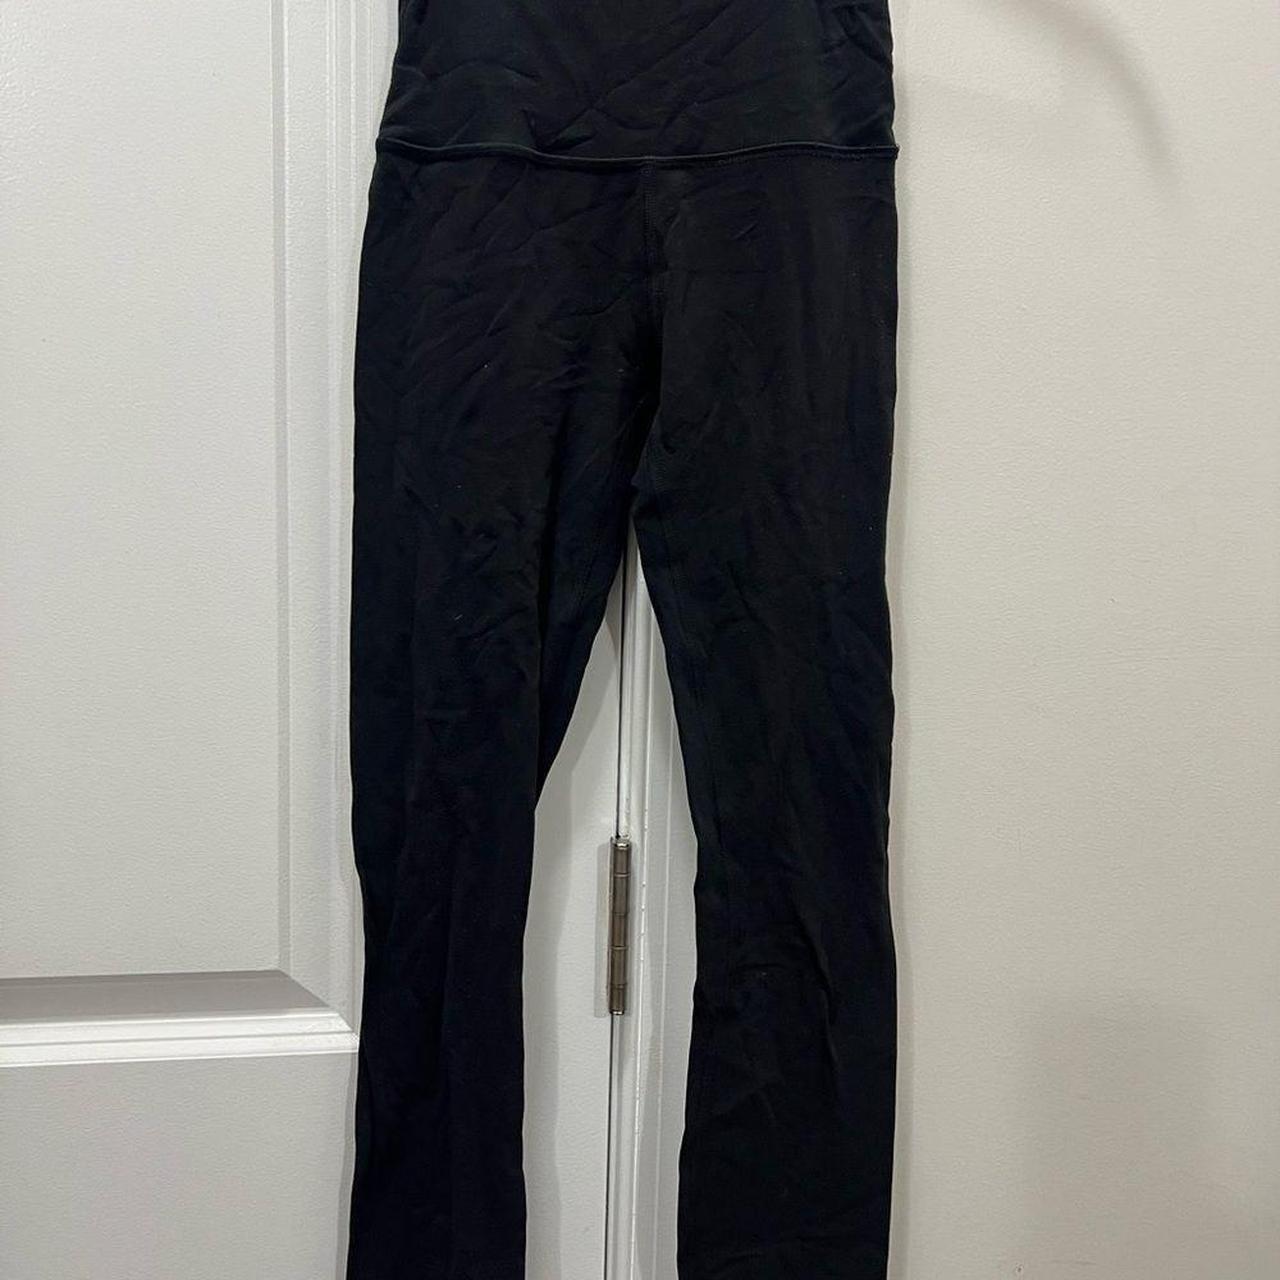 Black lululemon work pants #lululemon #comfy #black - Depop